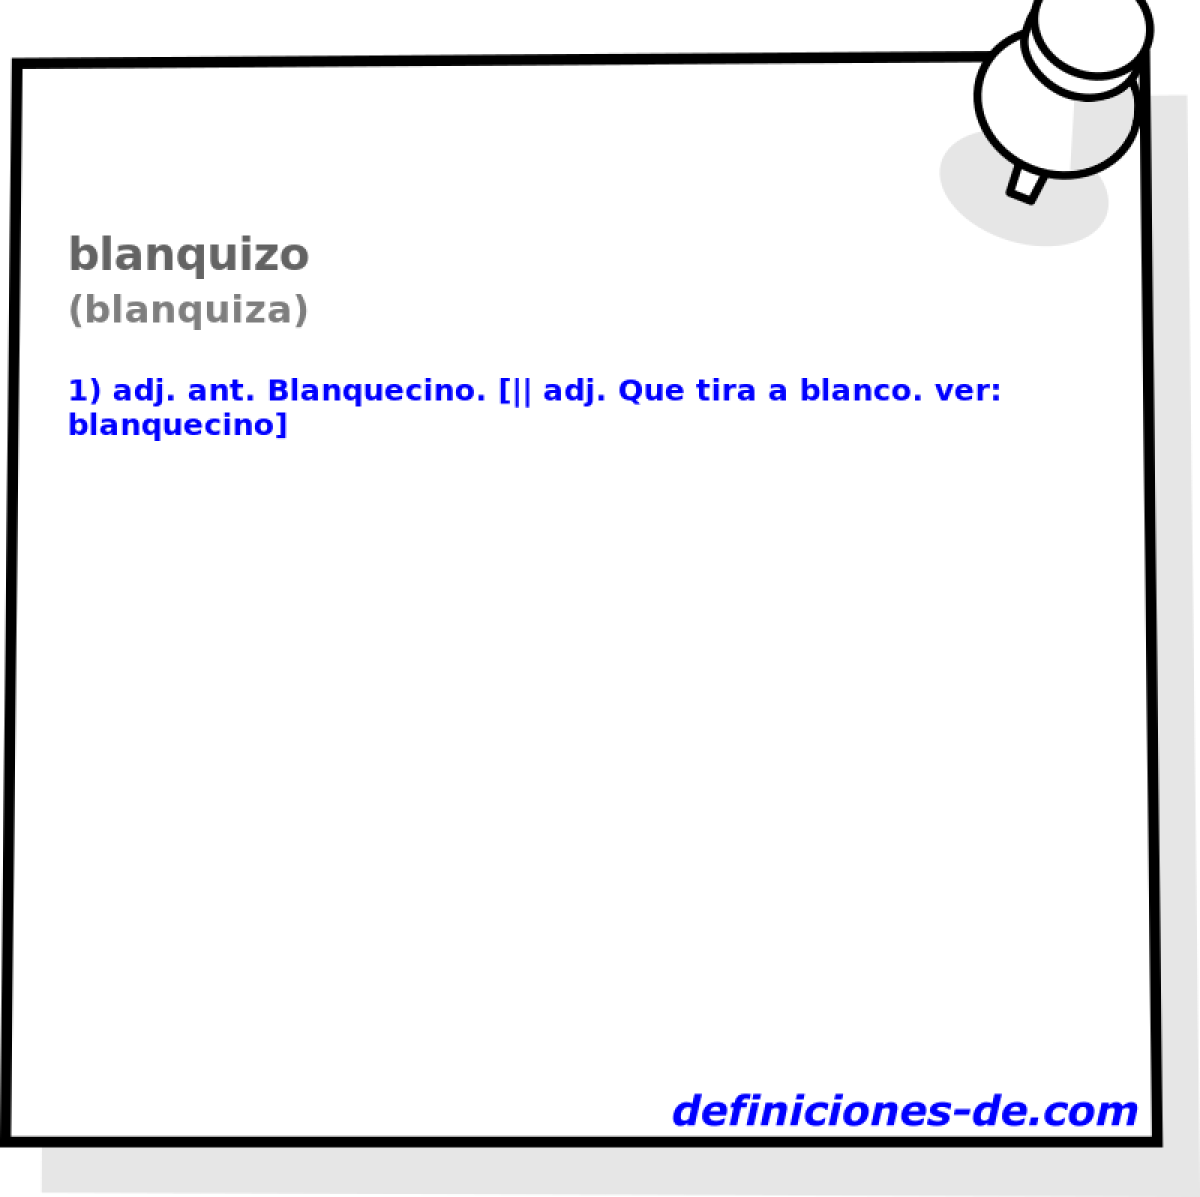 blanquizo (blanquiza)